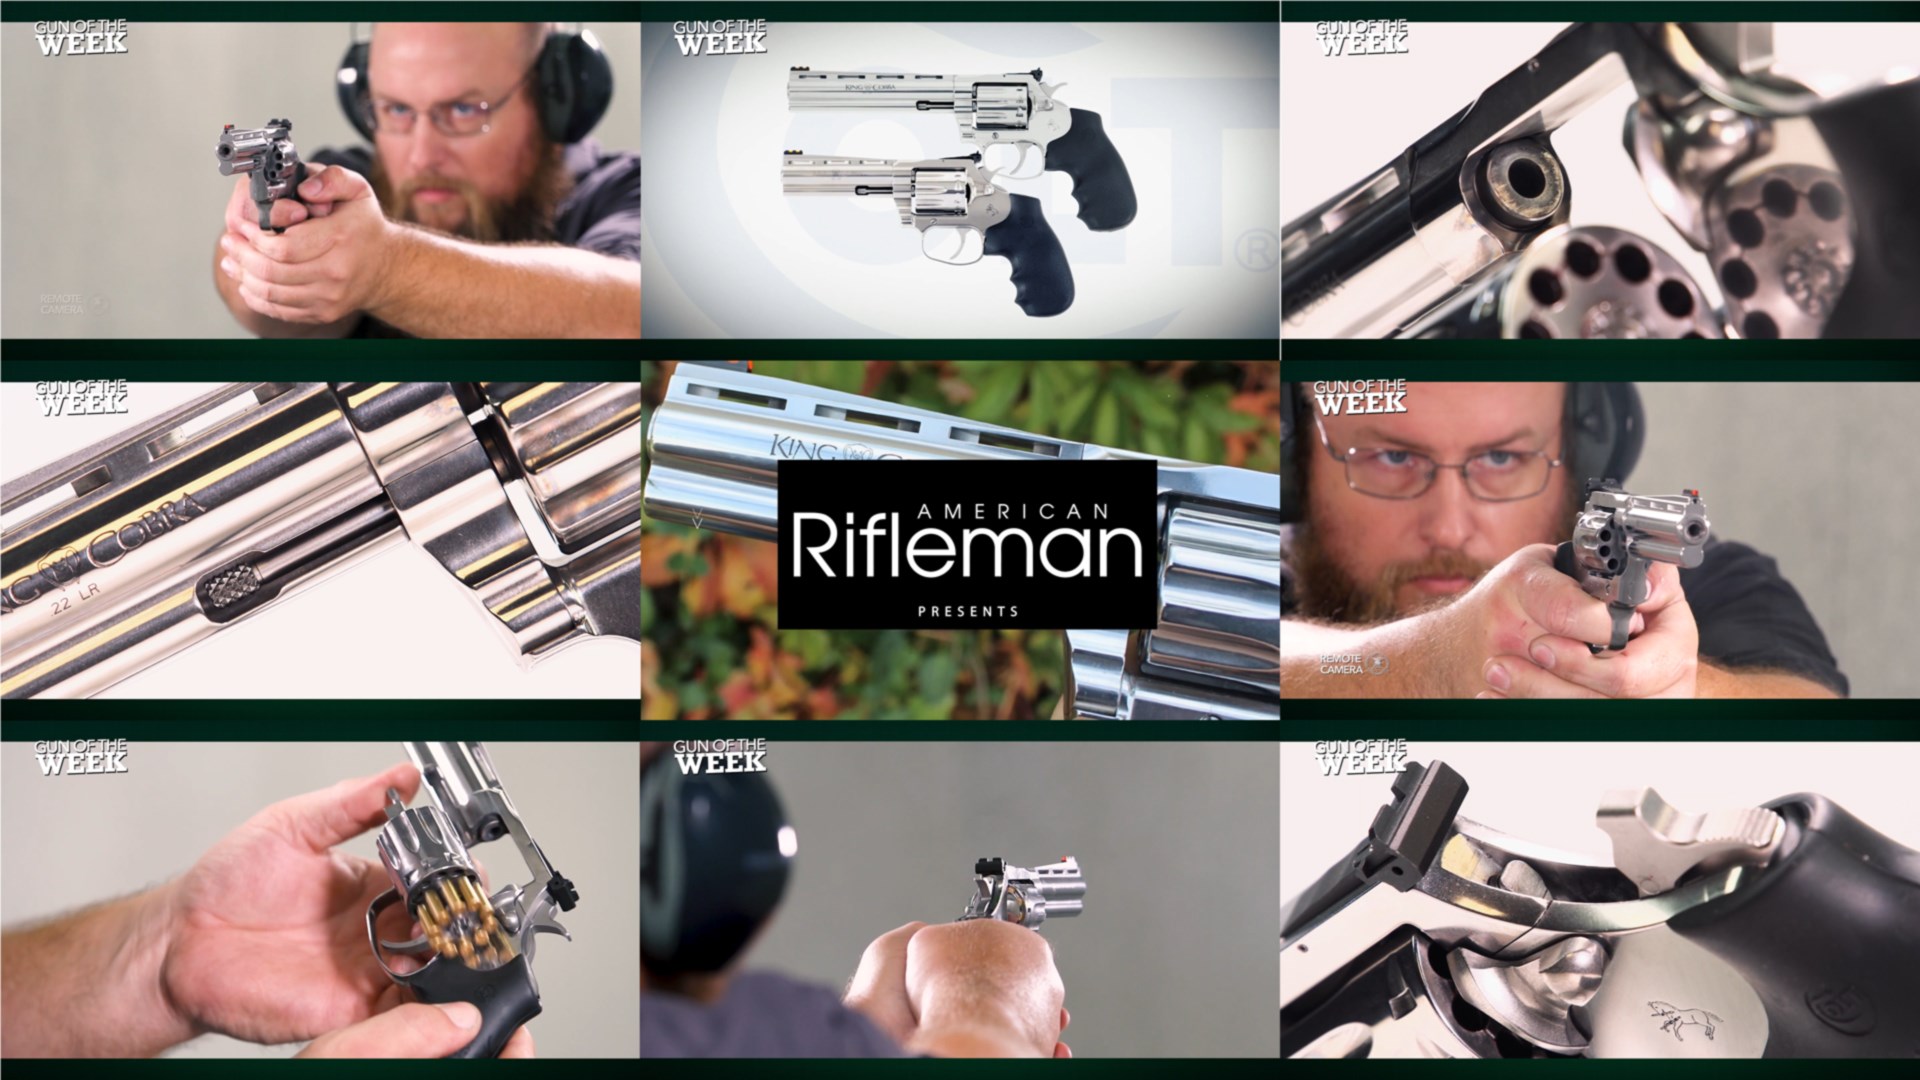 Colt King Cobra Target .22 LR revolver mosaic 9 images arrangement guns man shooting text in center tile noting AMERICAN RIFLEMAN PRESENTS